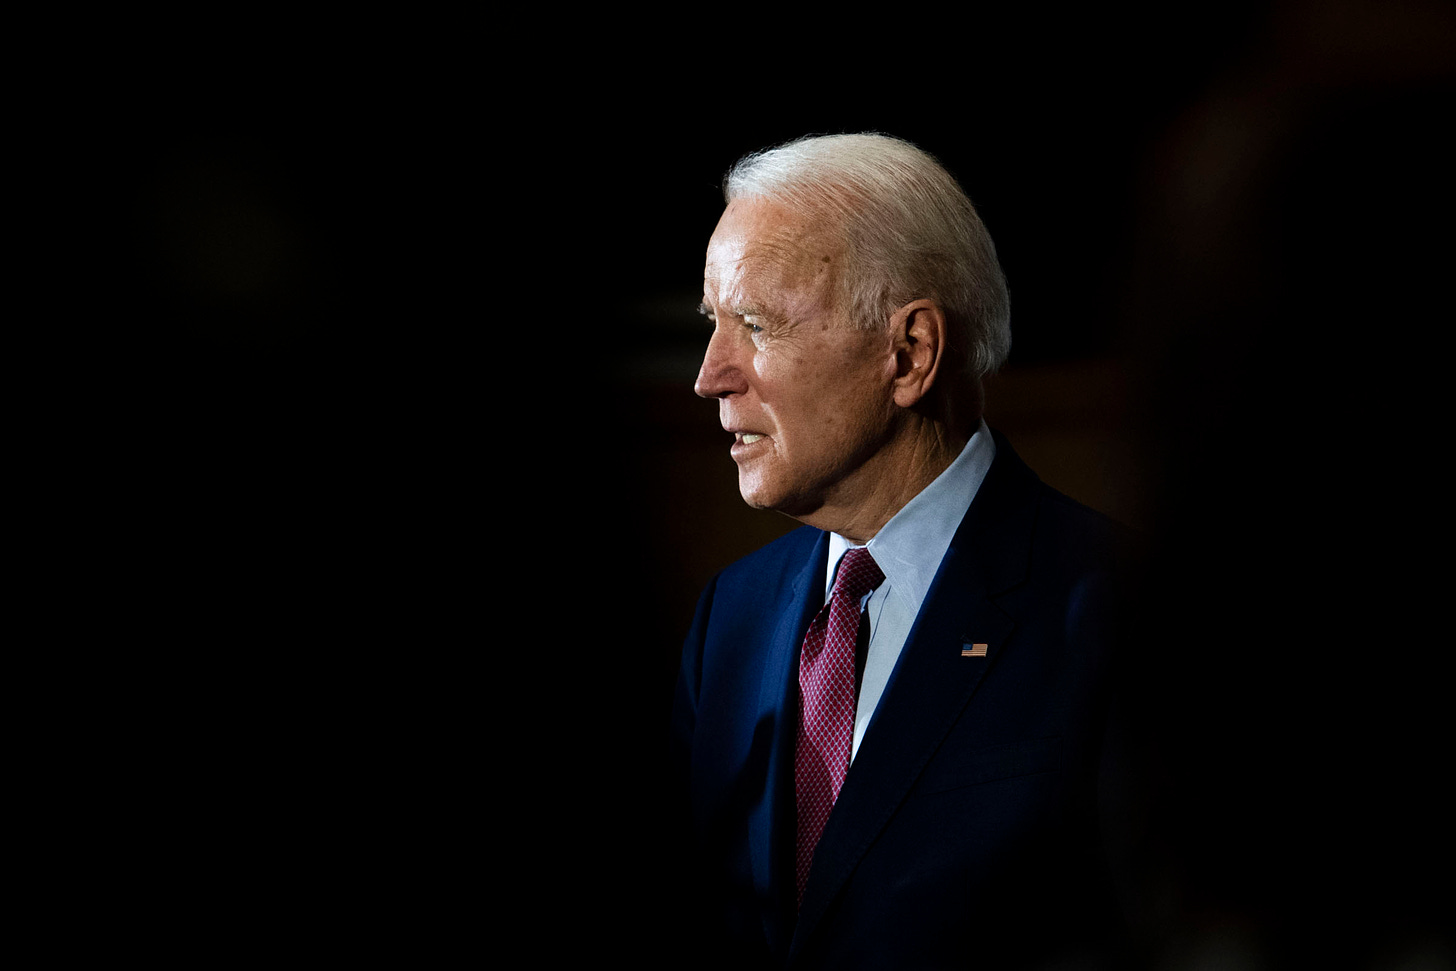 The nation is in crisis. Where are you, Joe Biden? - The Boston Globe